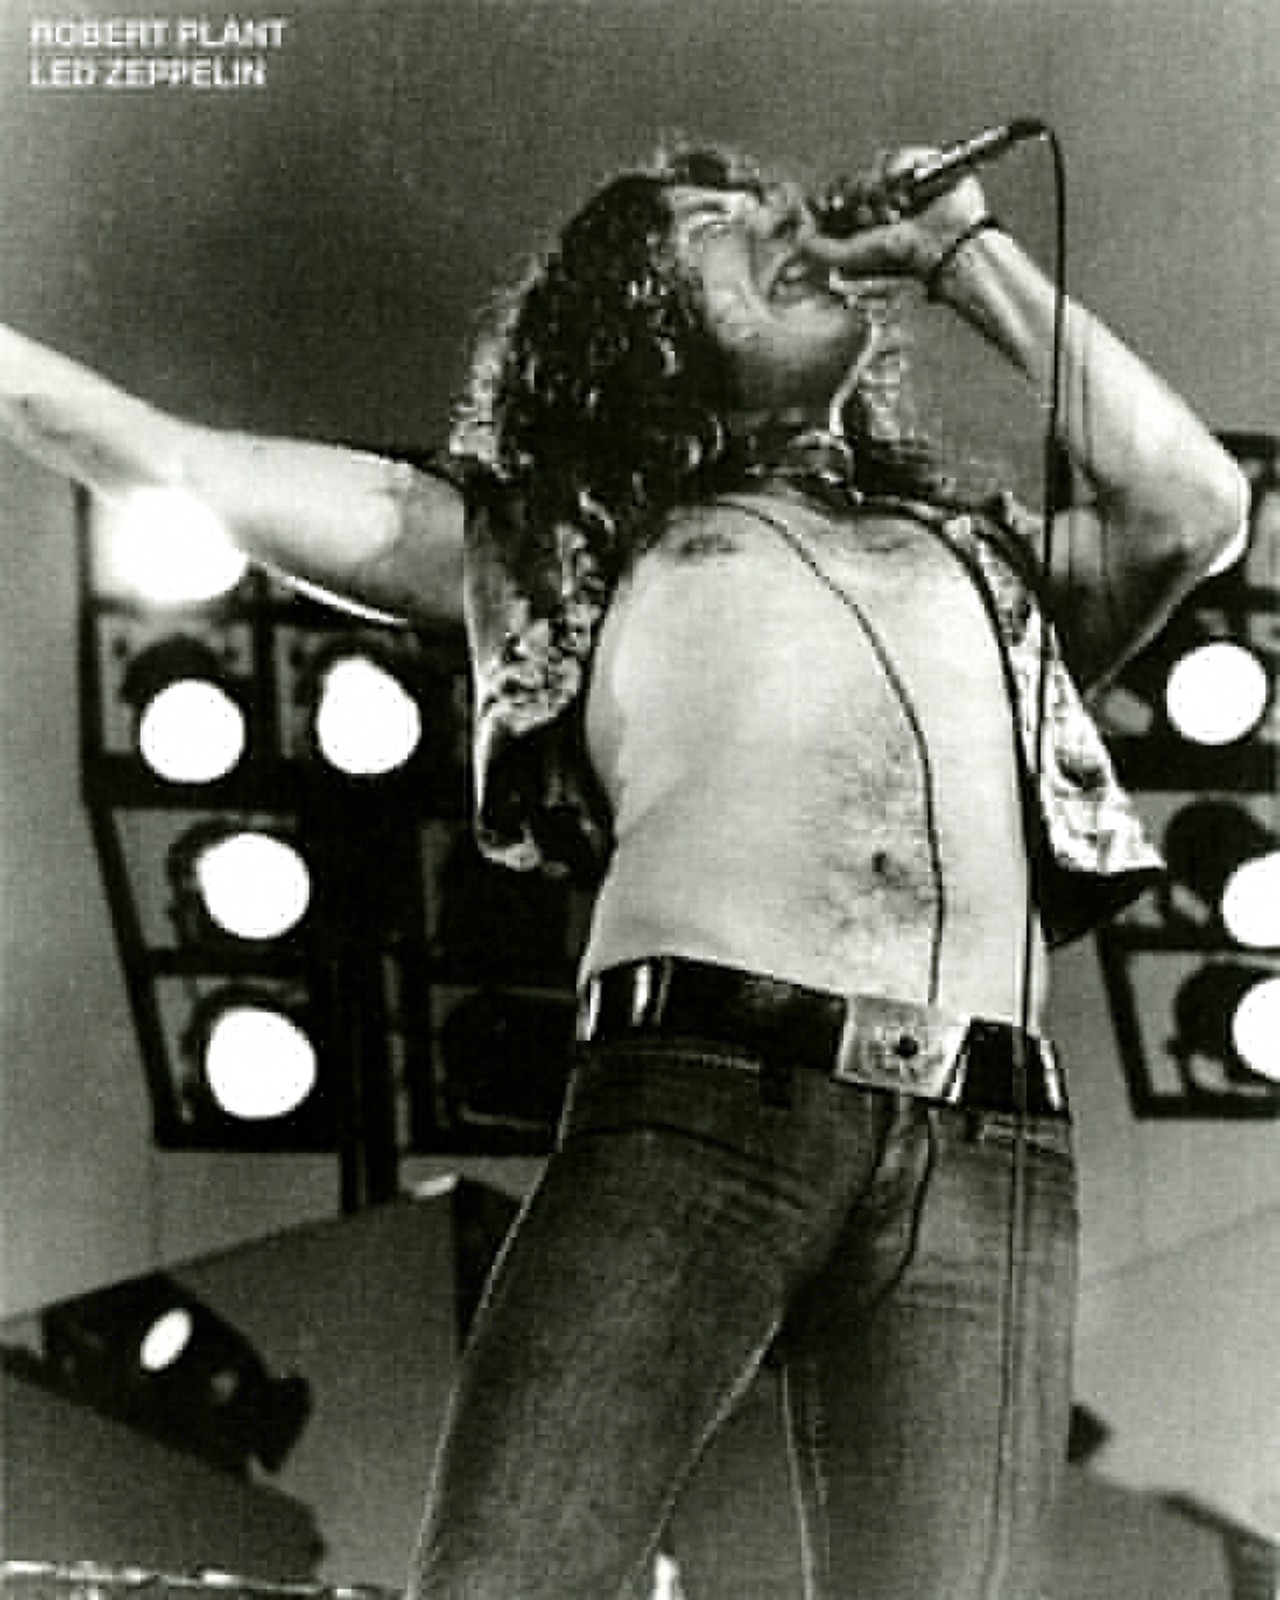 Robert Plant - Led Zeppelin - May 6, 1973 - Tampa Stadium